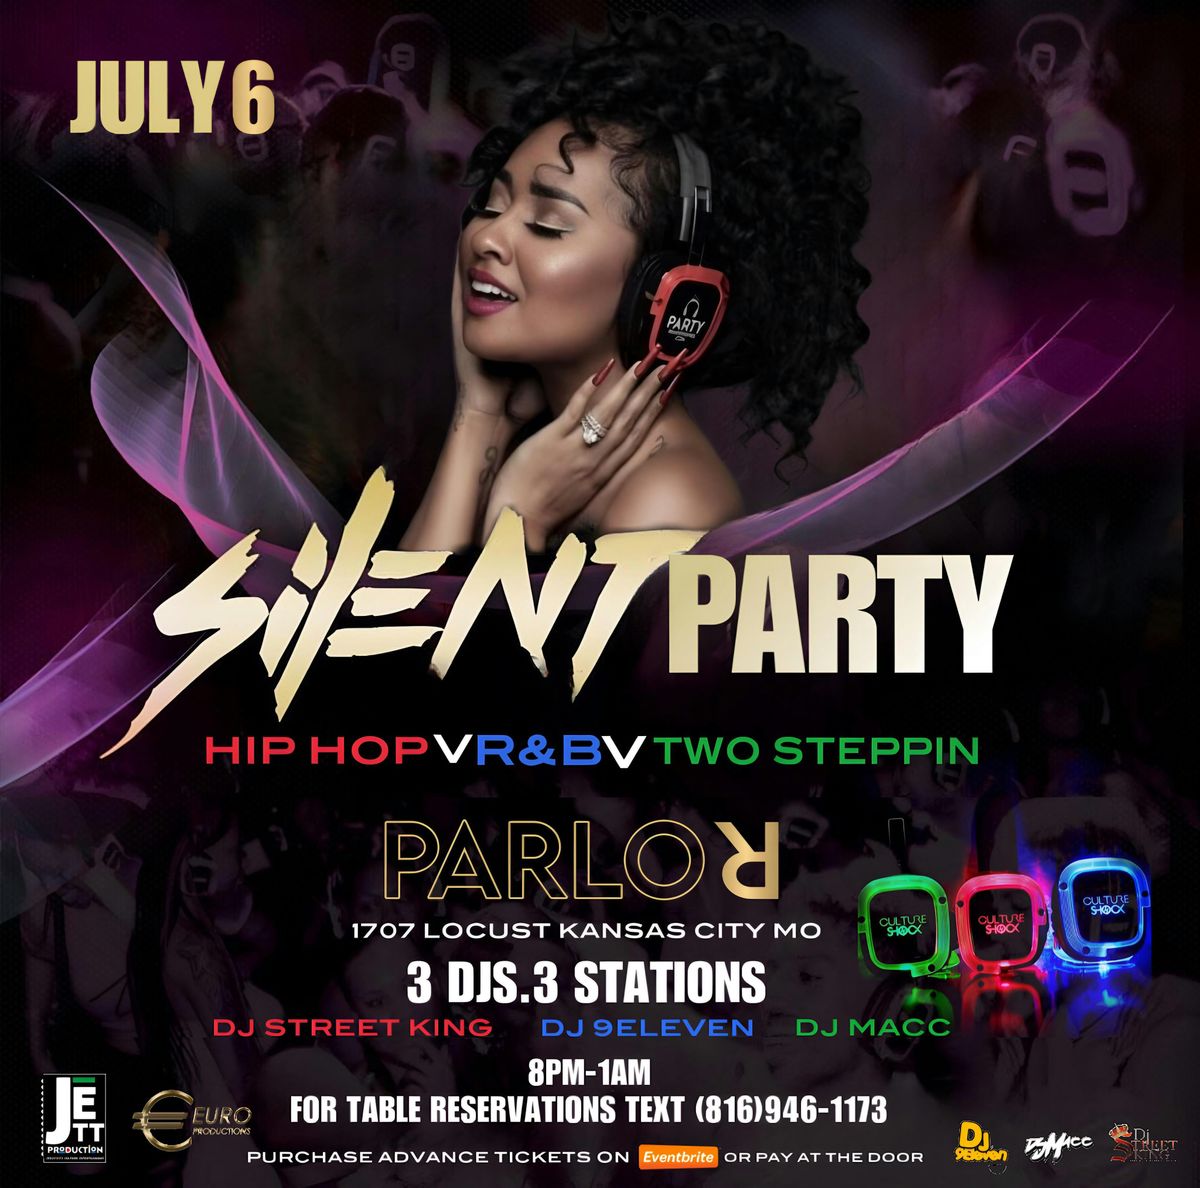 Silent Party Hip hop V R&B V Two Steppin